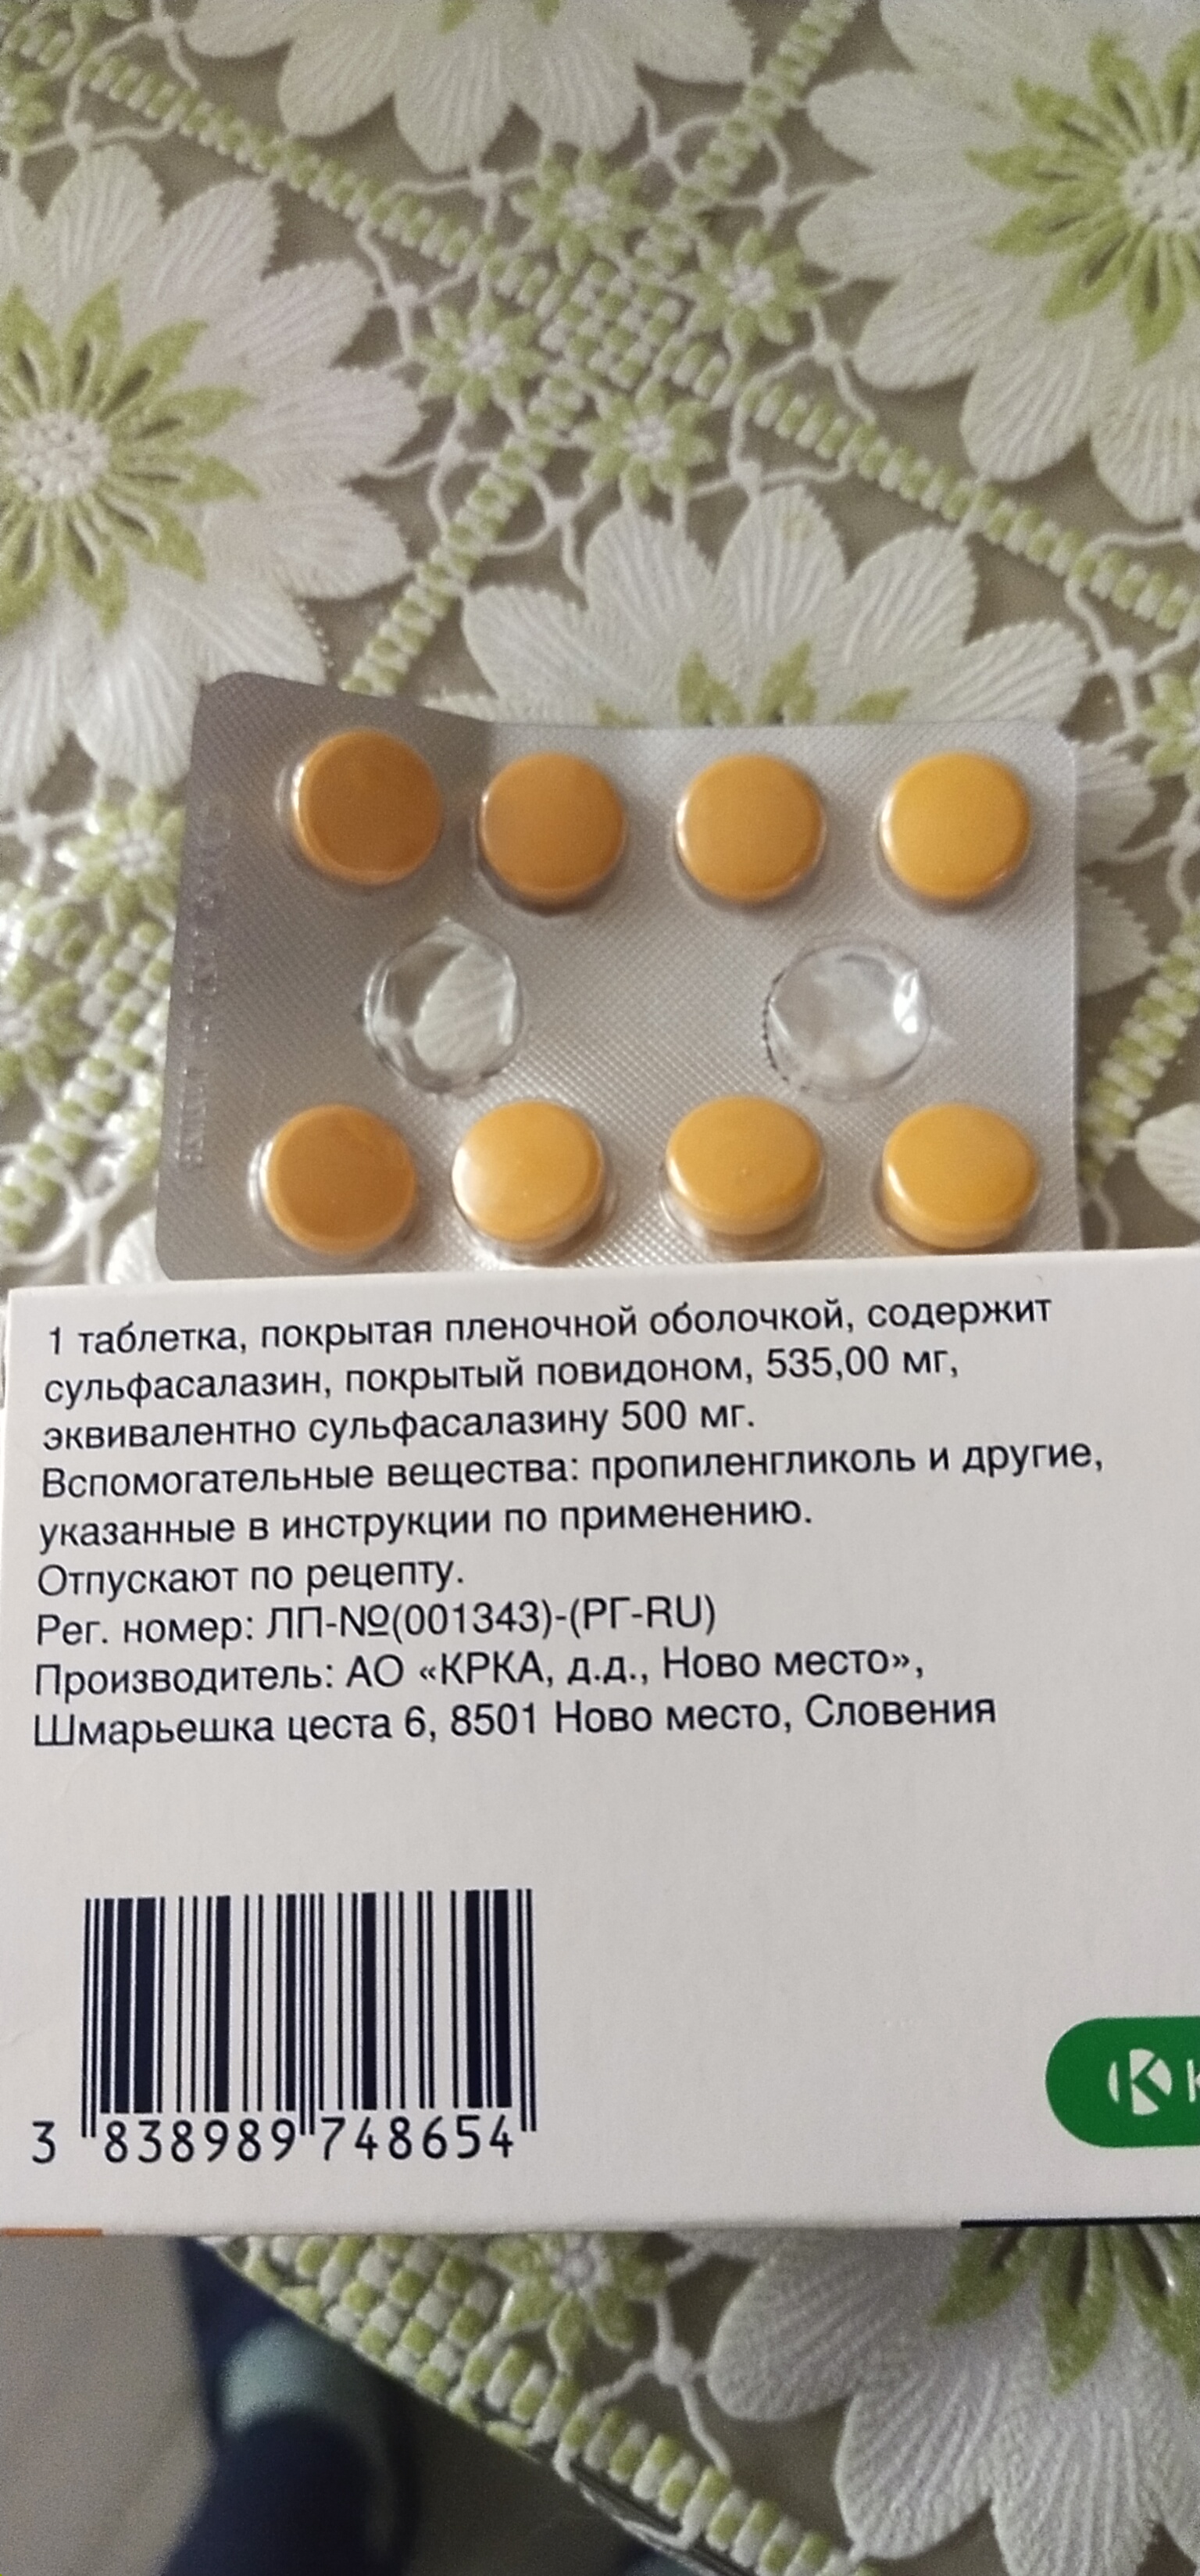 Таблетки сульфасалазин отзывы